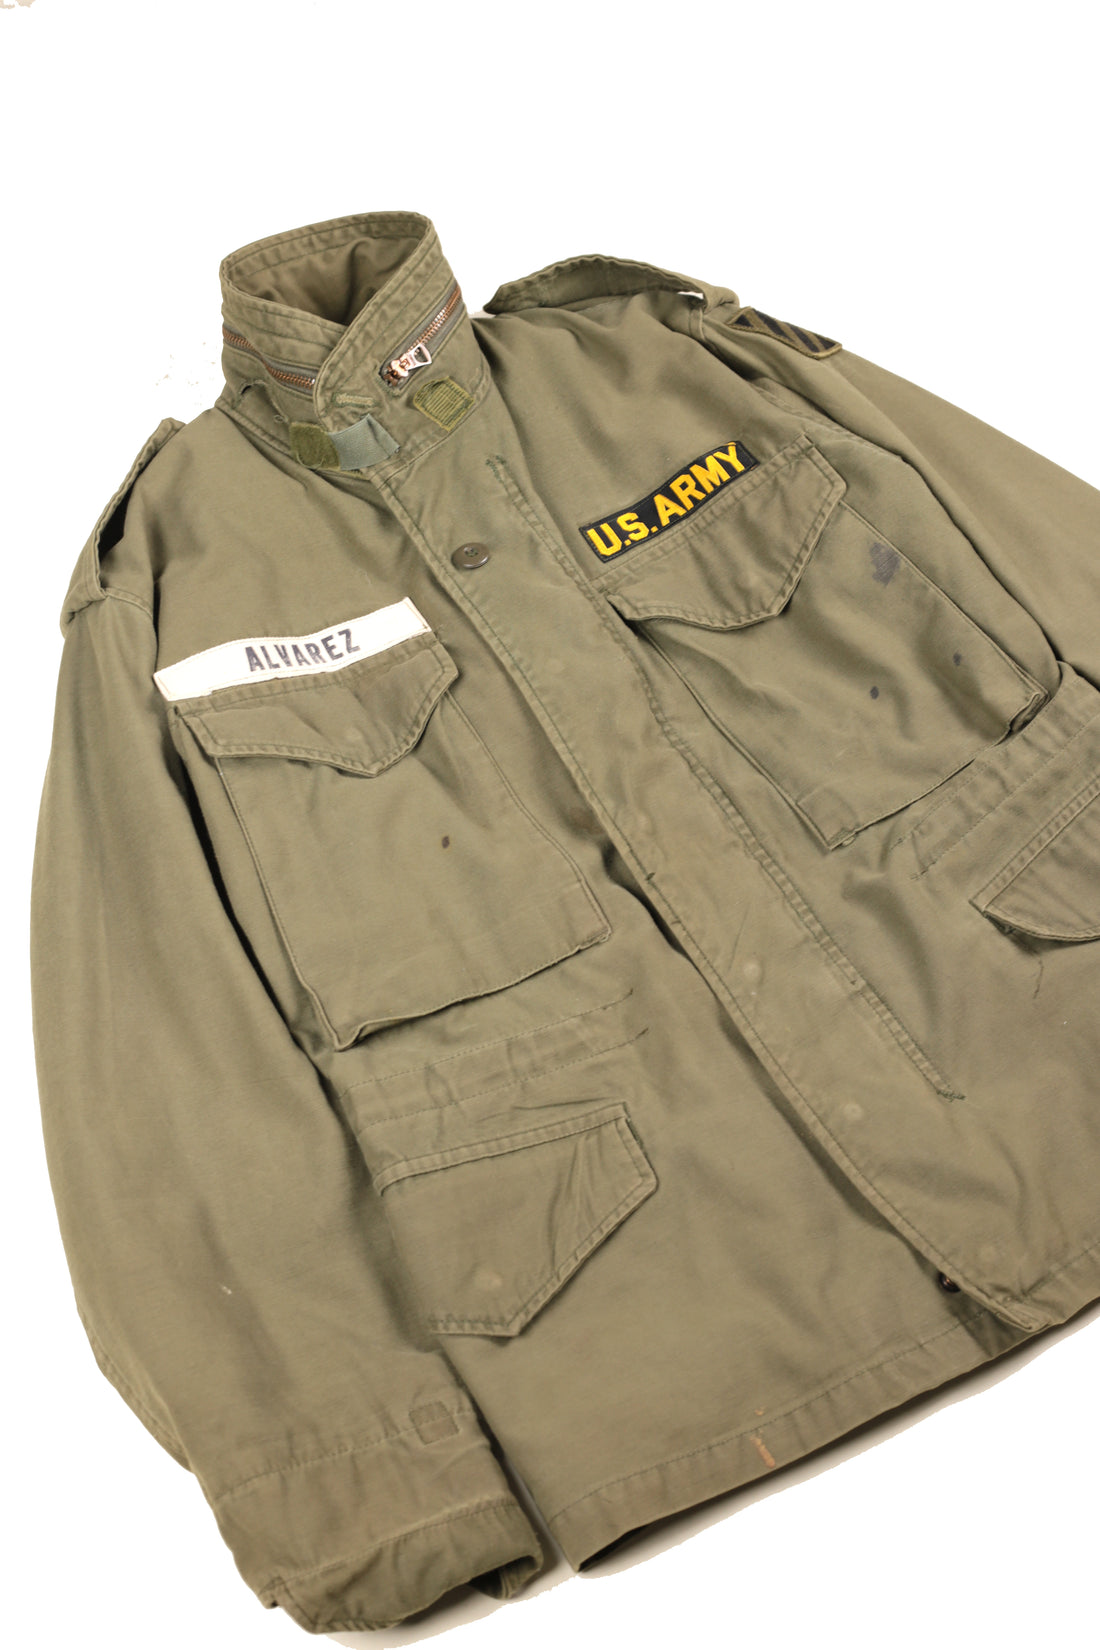 field jacket M-65 Us Army - S -